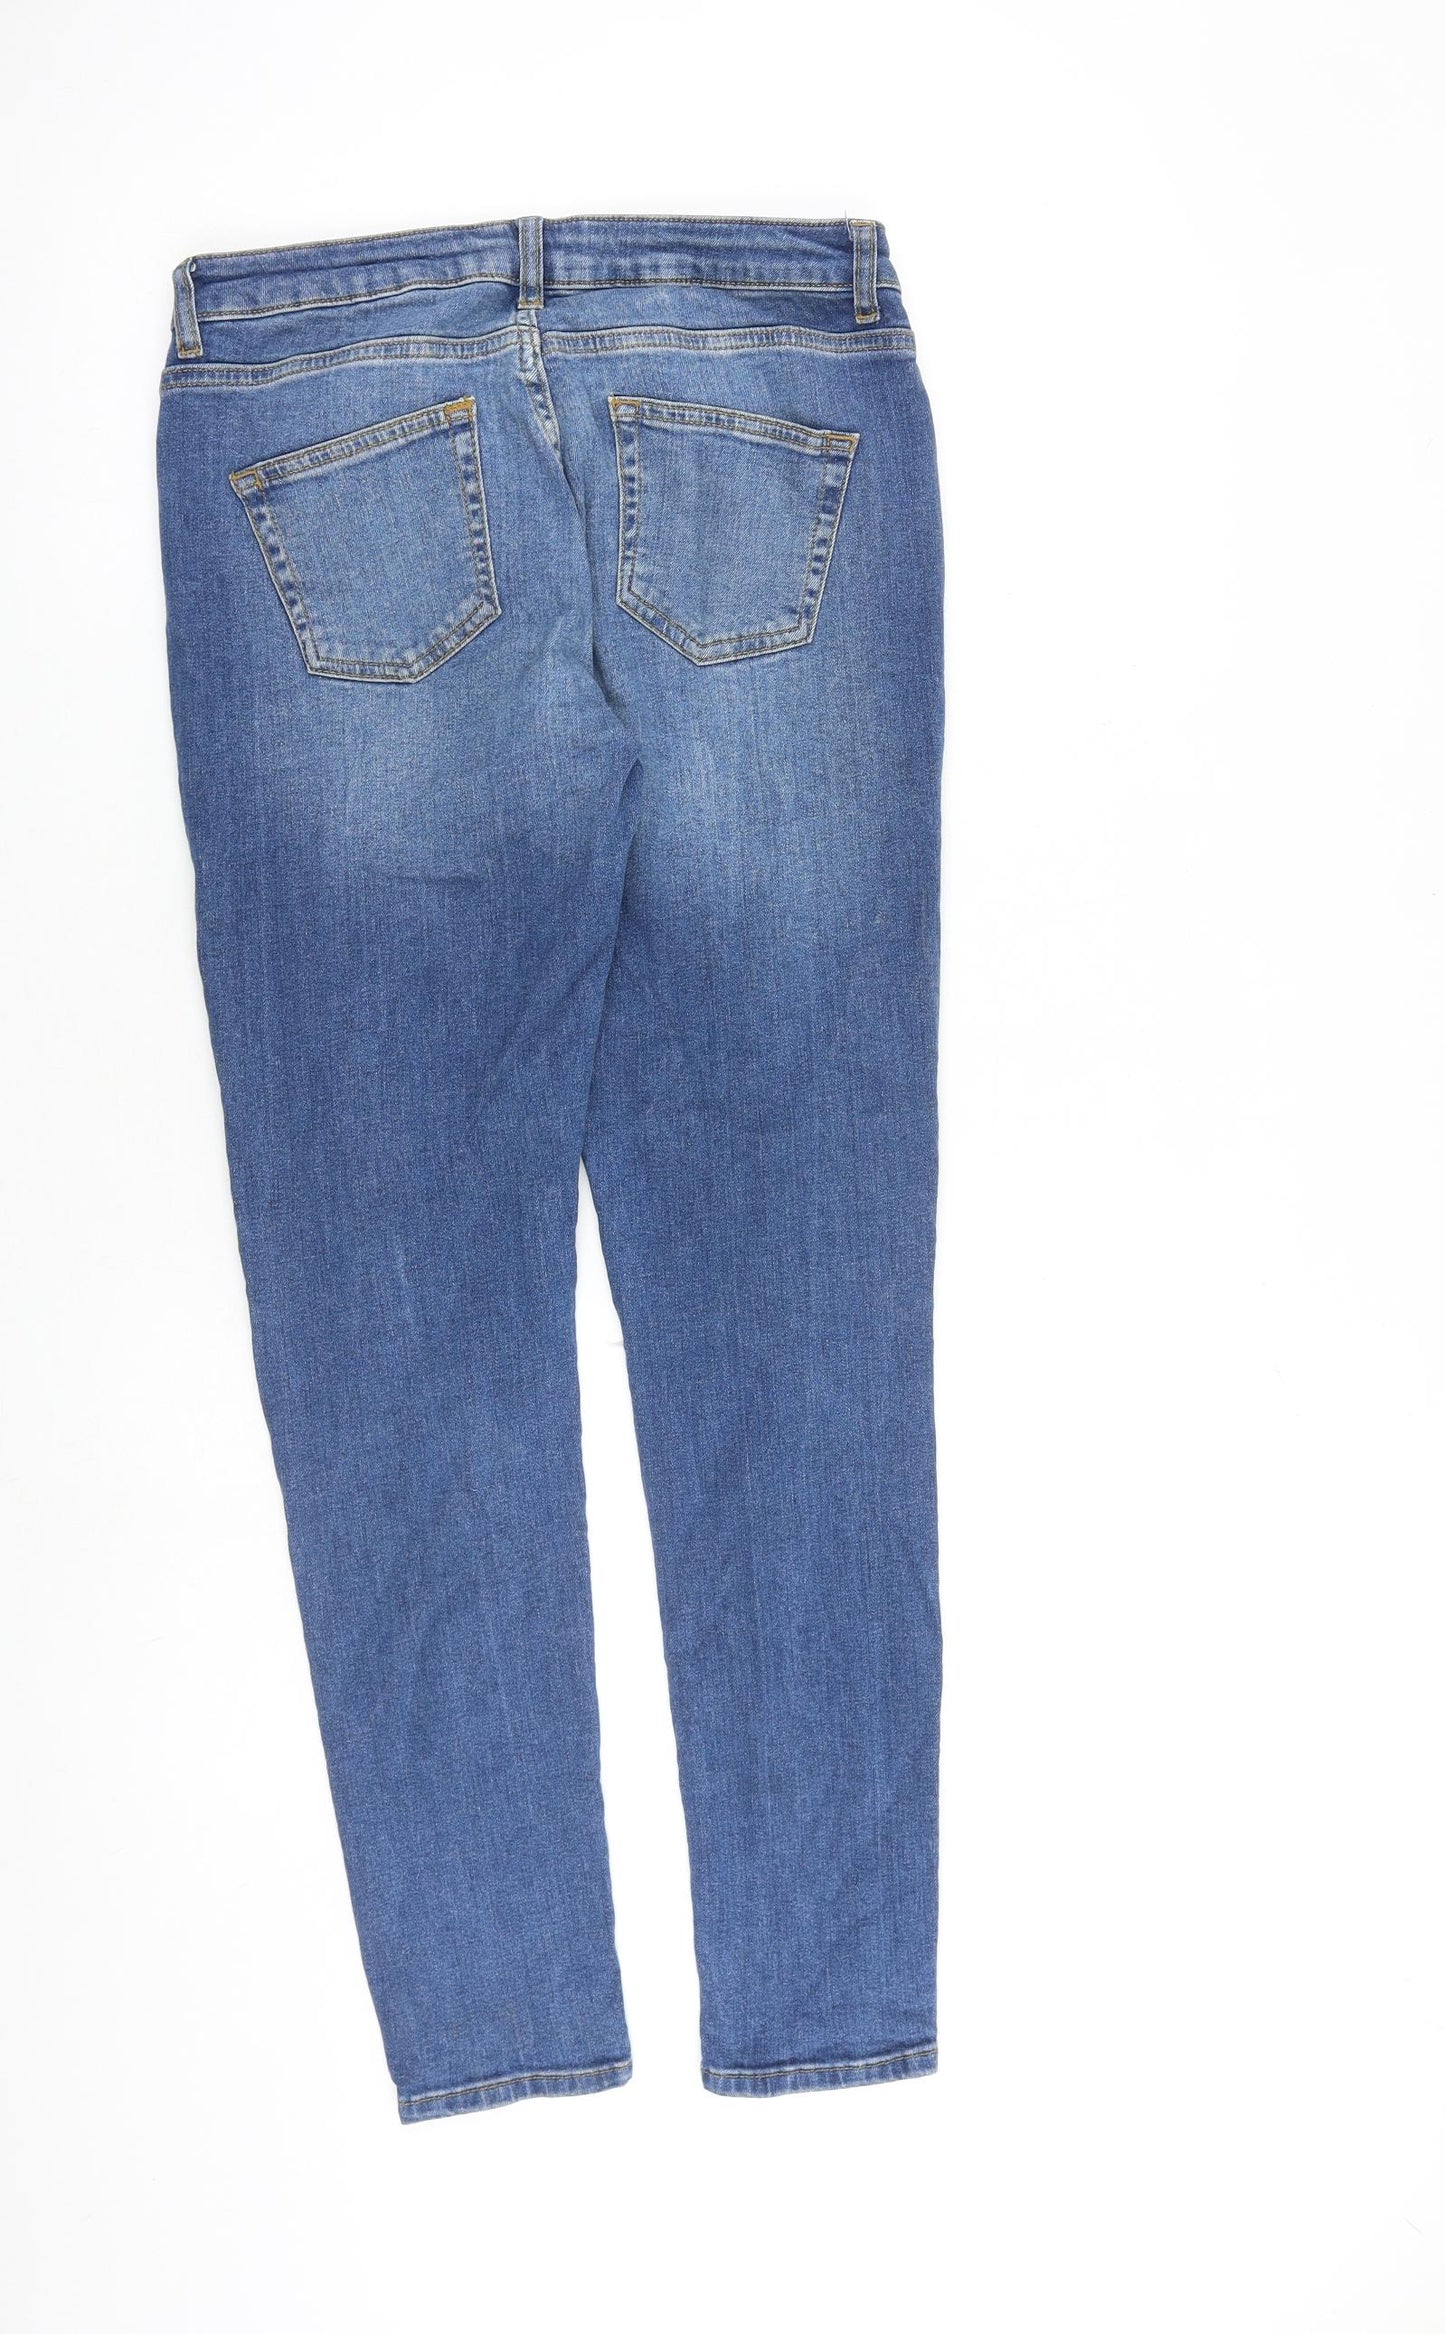 Denim & Co. Womens Blue Cotton Skinny Jeans Size 12 L29 in Regular Zip